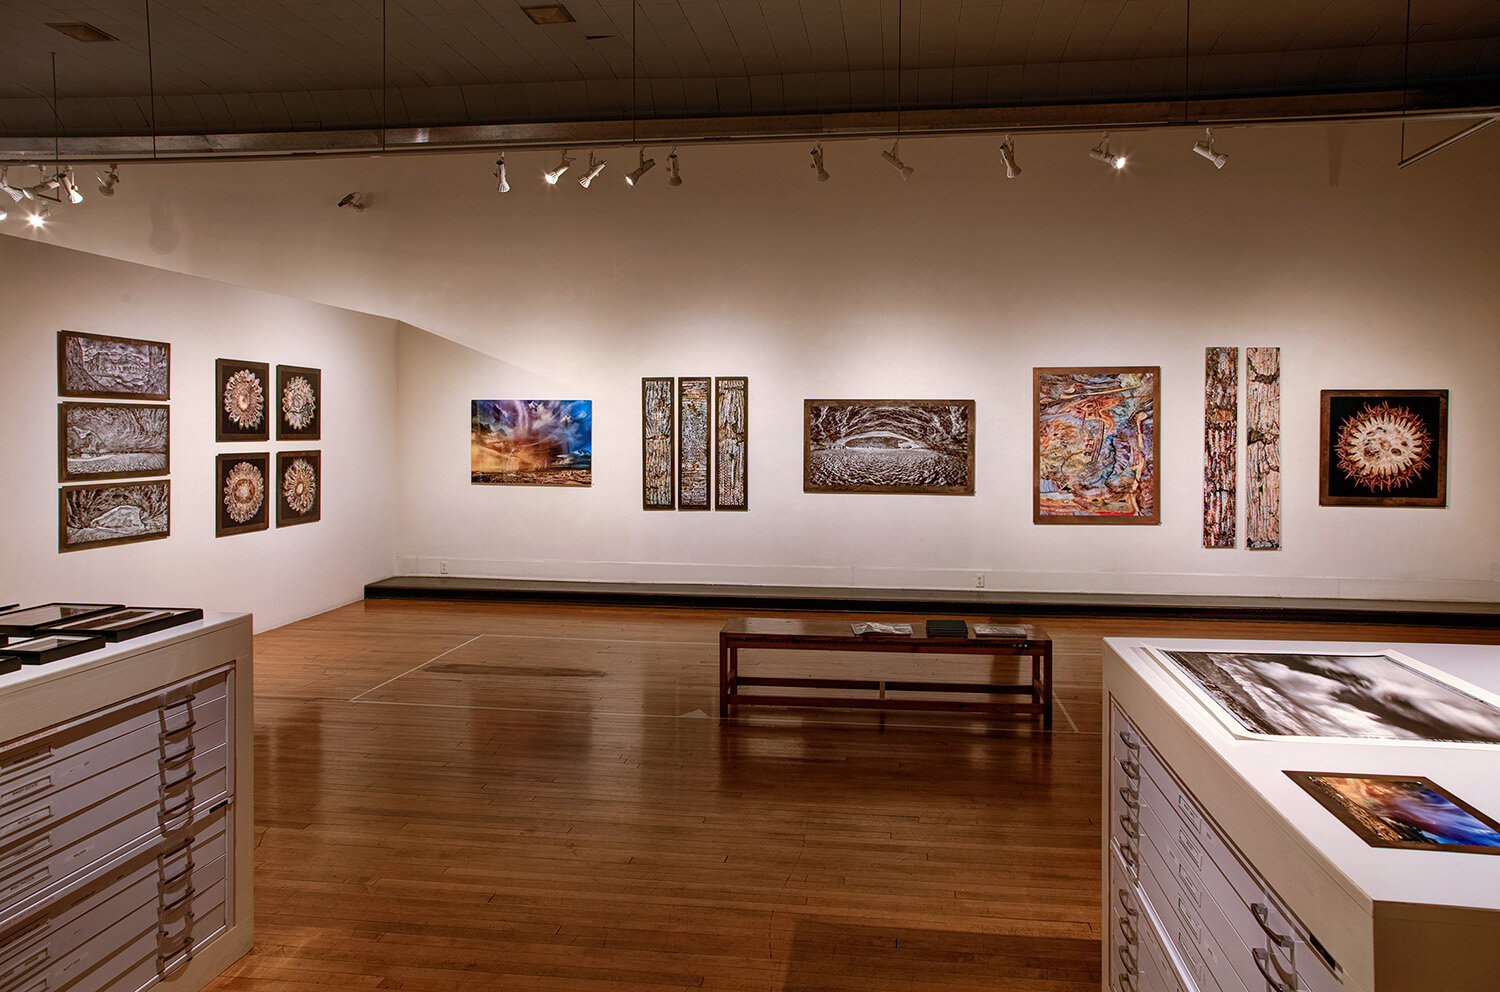 William Lesch Gallery Exhibit at Etherton Gallery, Tucson, AZ